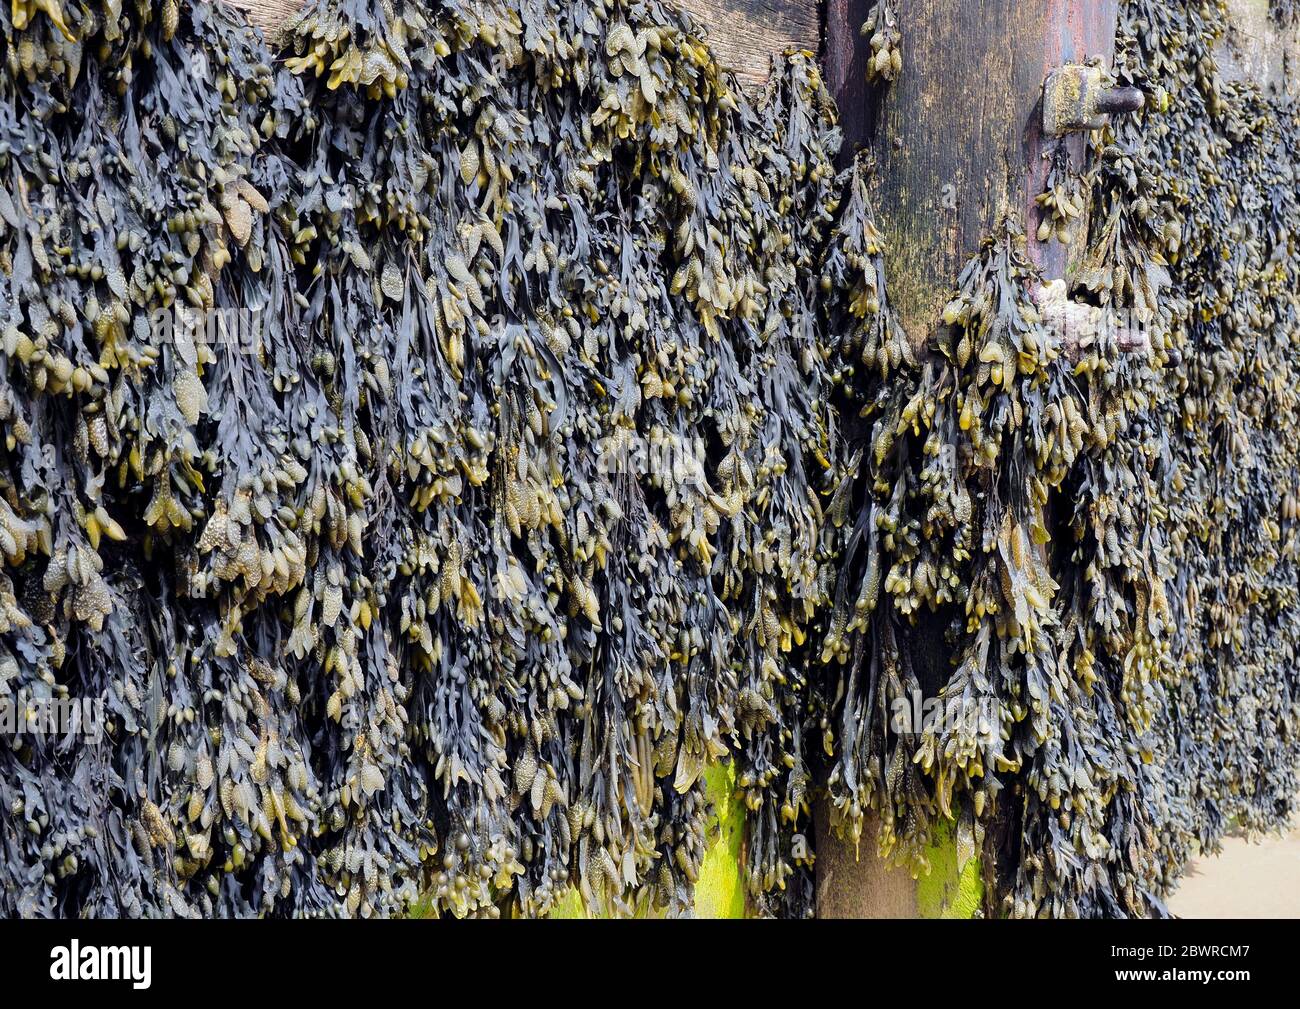 Bladder wrack or Brown Kelp is a common seaweed often found growing on coastal defence groynes in the inter-tidal zone as here in Cromer, Norfolk. Stock Photo